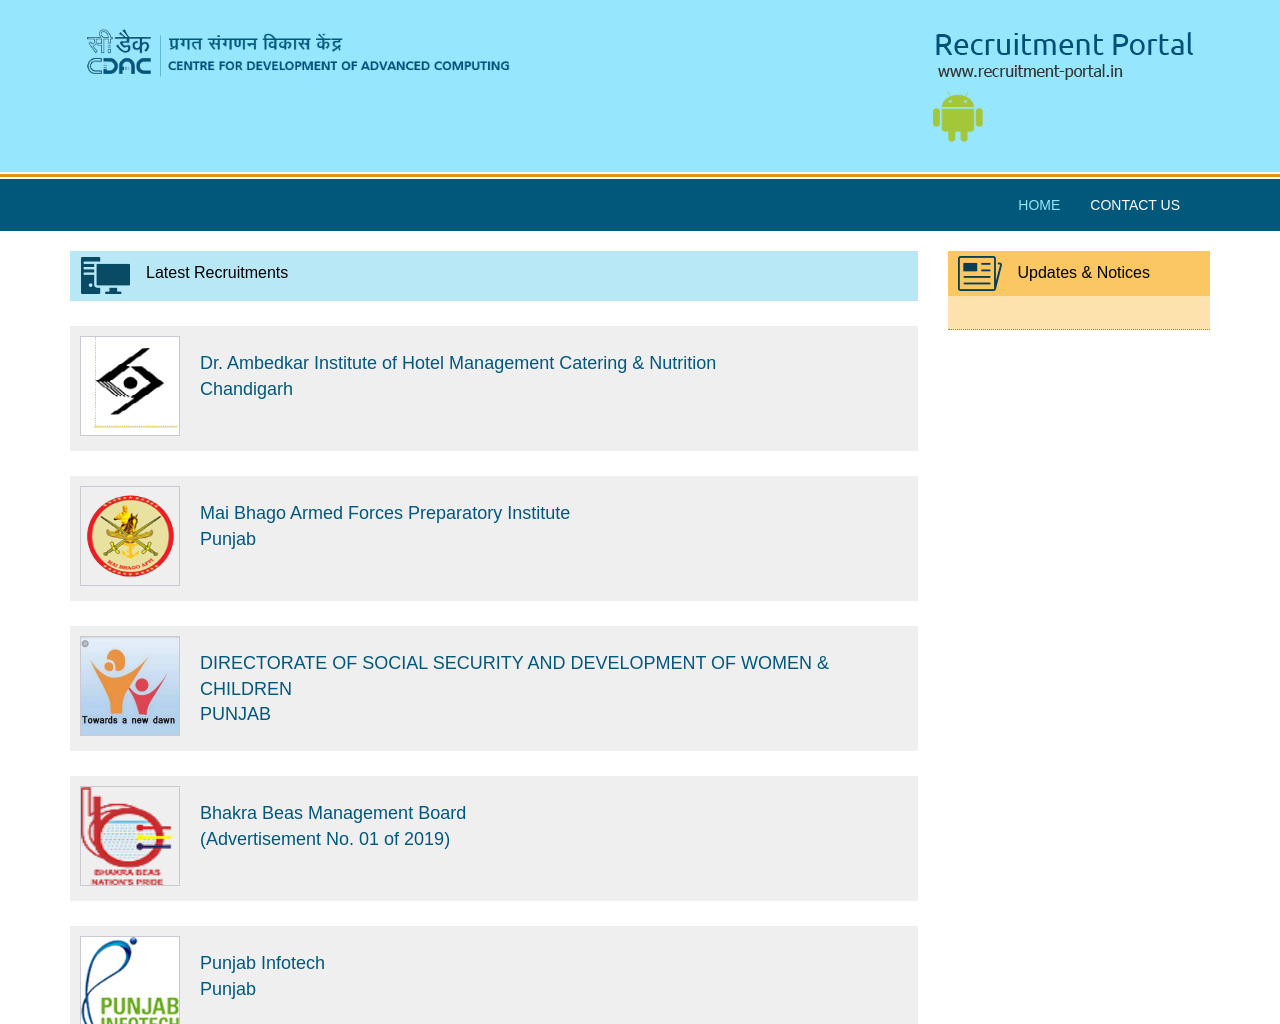 recruitment-portal.in